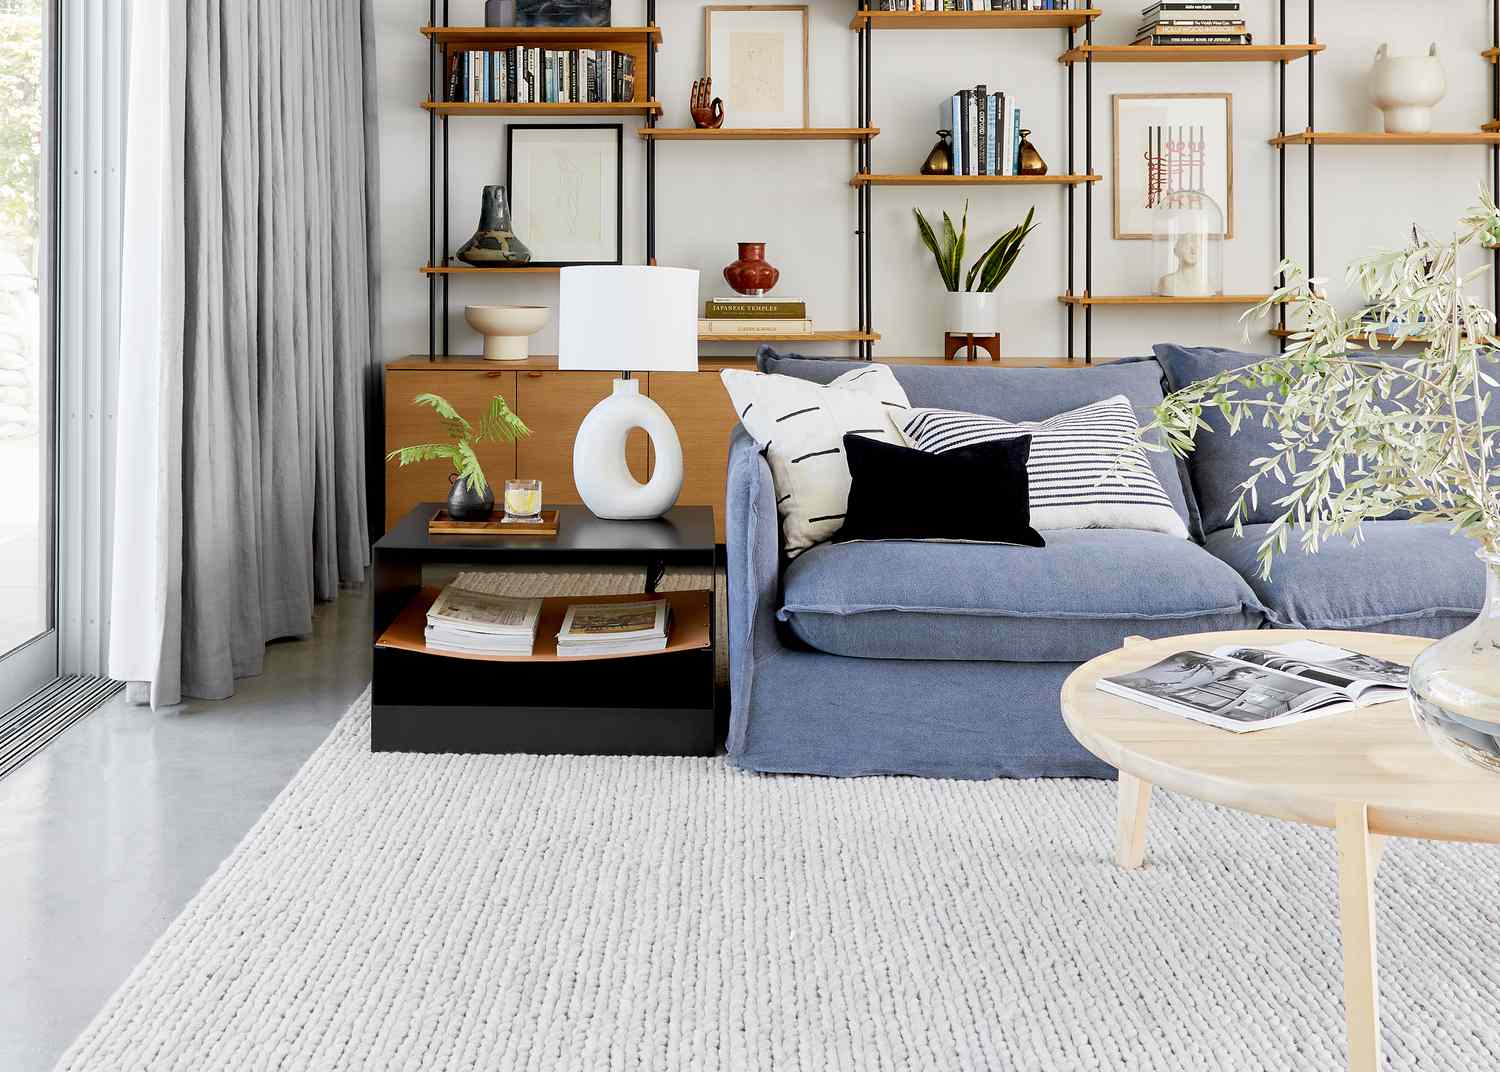 braided wool rug in a living room